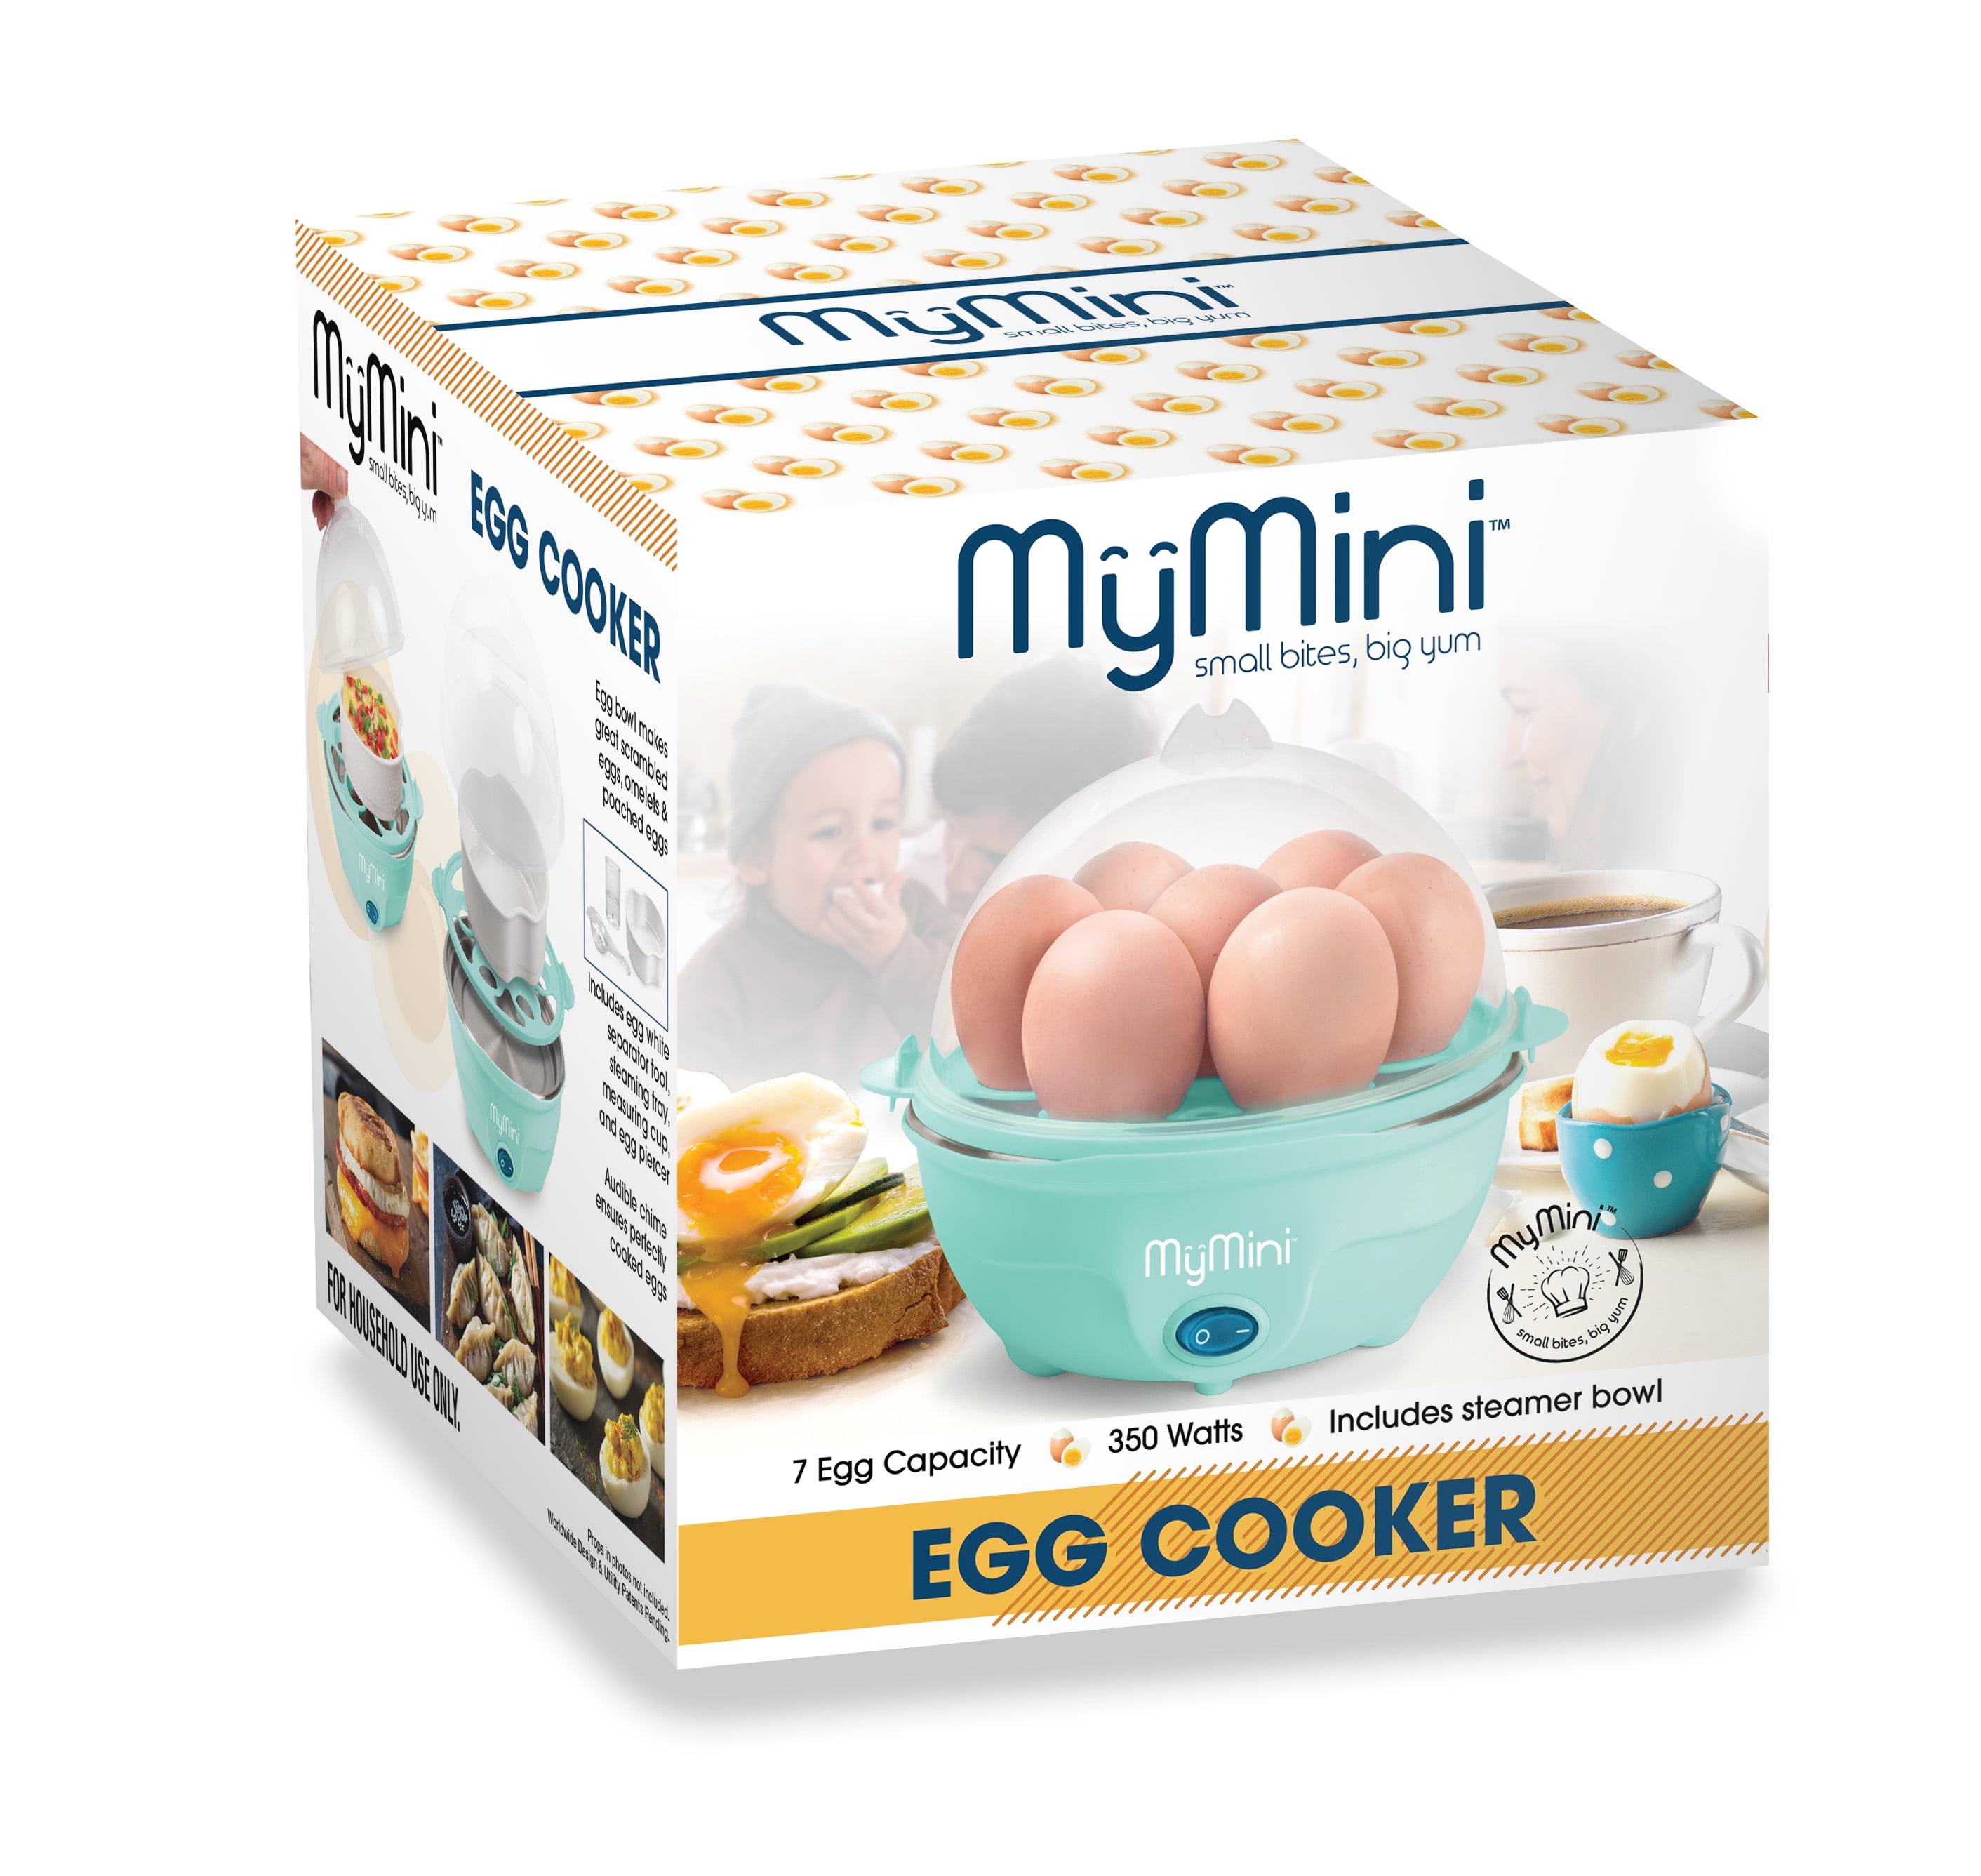 Nostalgia My Mini 7- Egg Cooker (TEAL) Egg Separator Tool ,Perfect Eggs